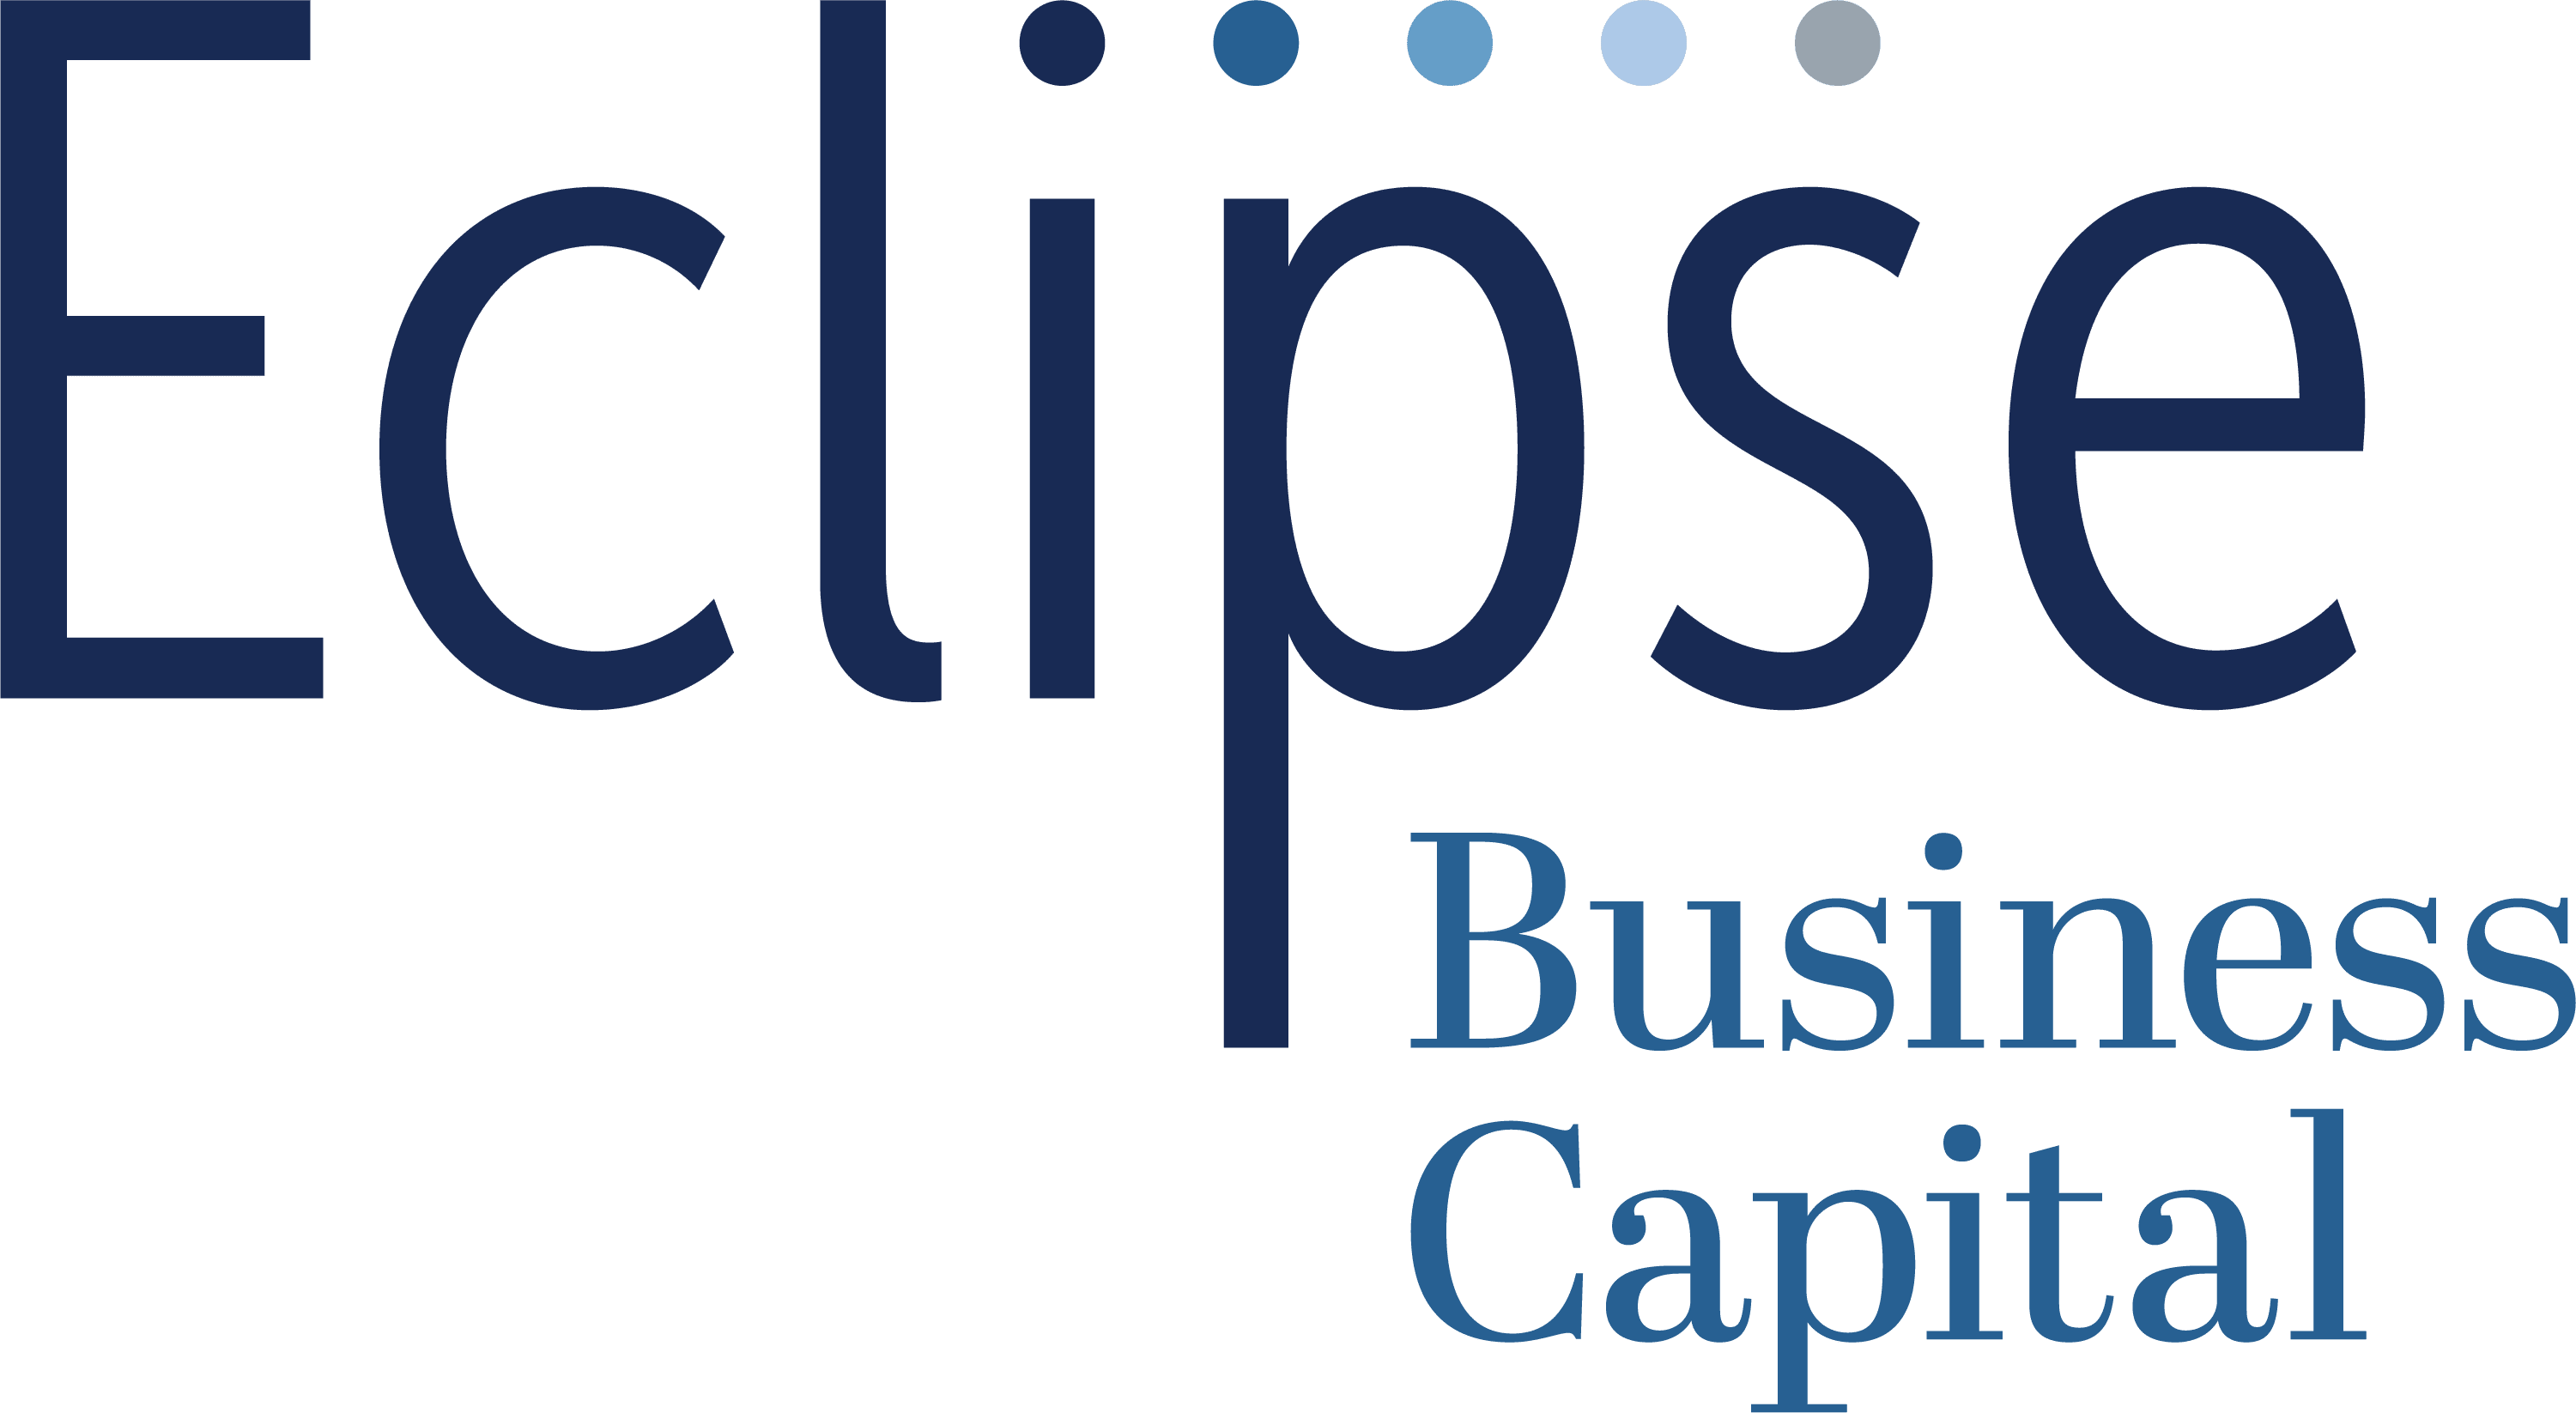 Eclipse Business Capital